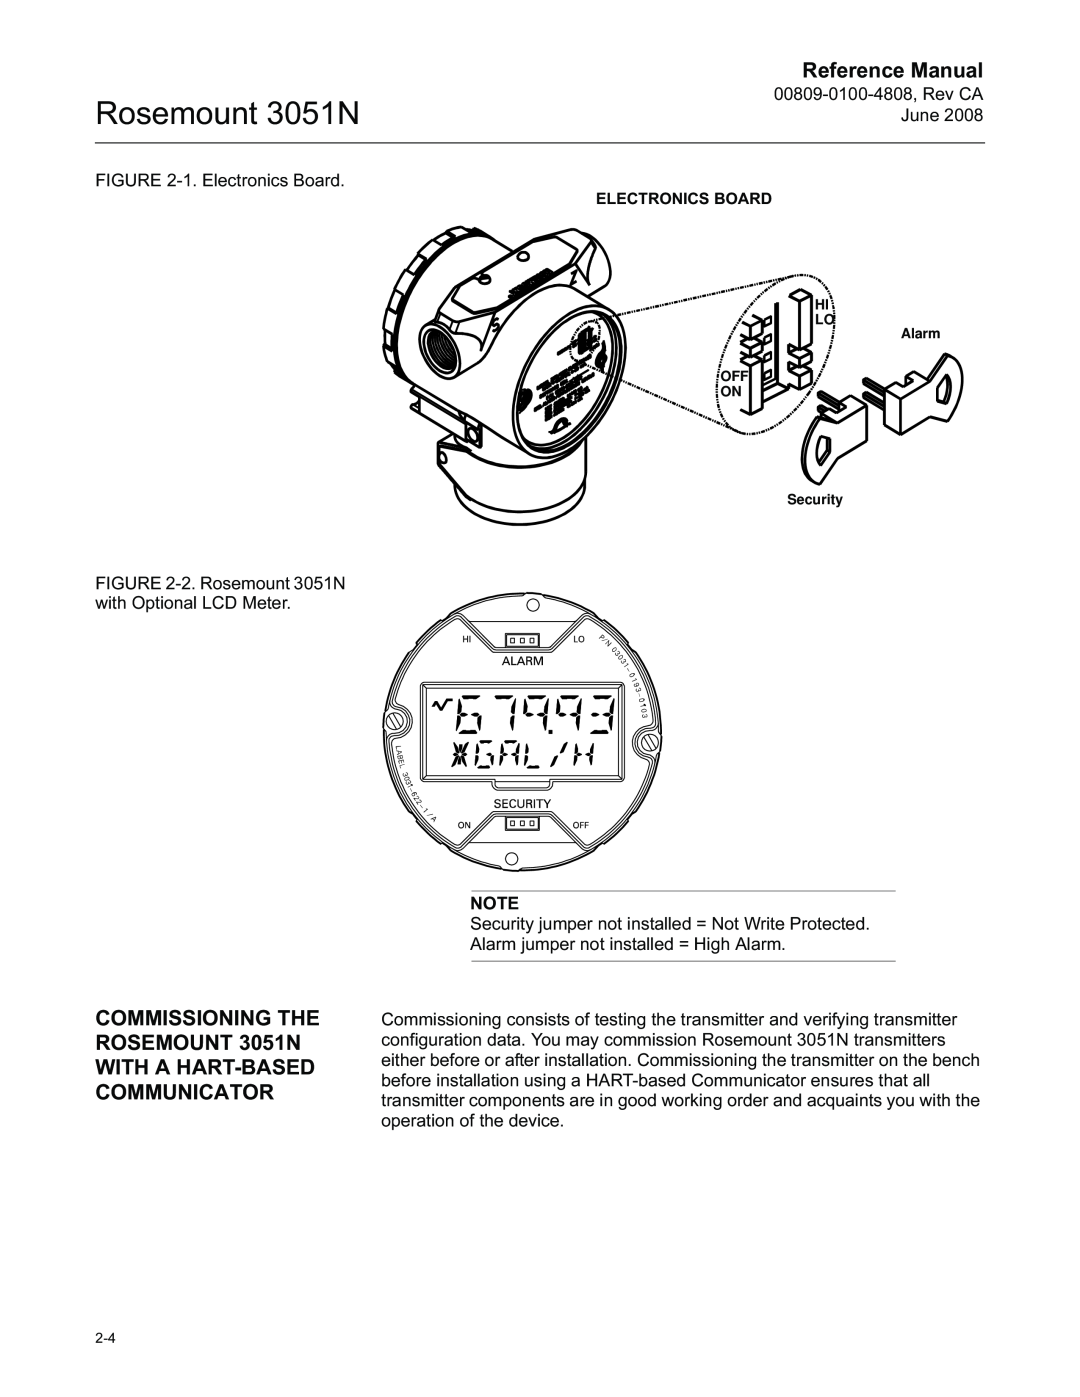 Emerson manual Rosemount 3051N, Reference Manual 